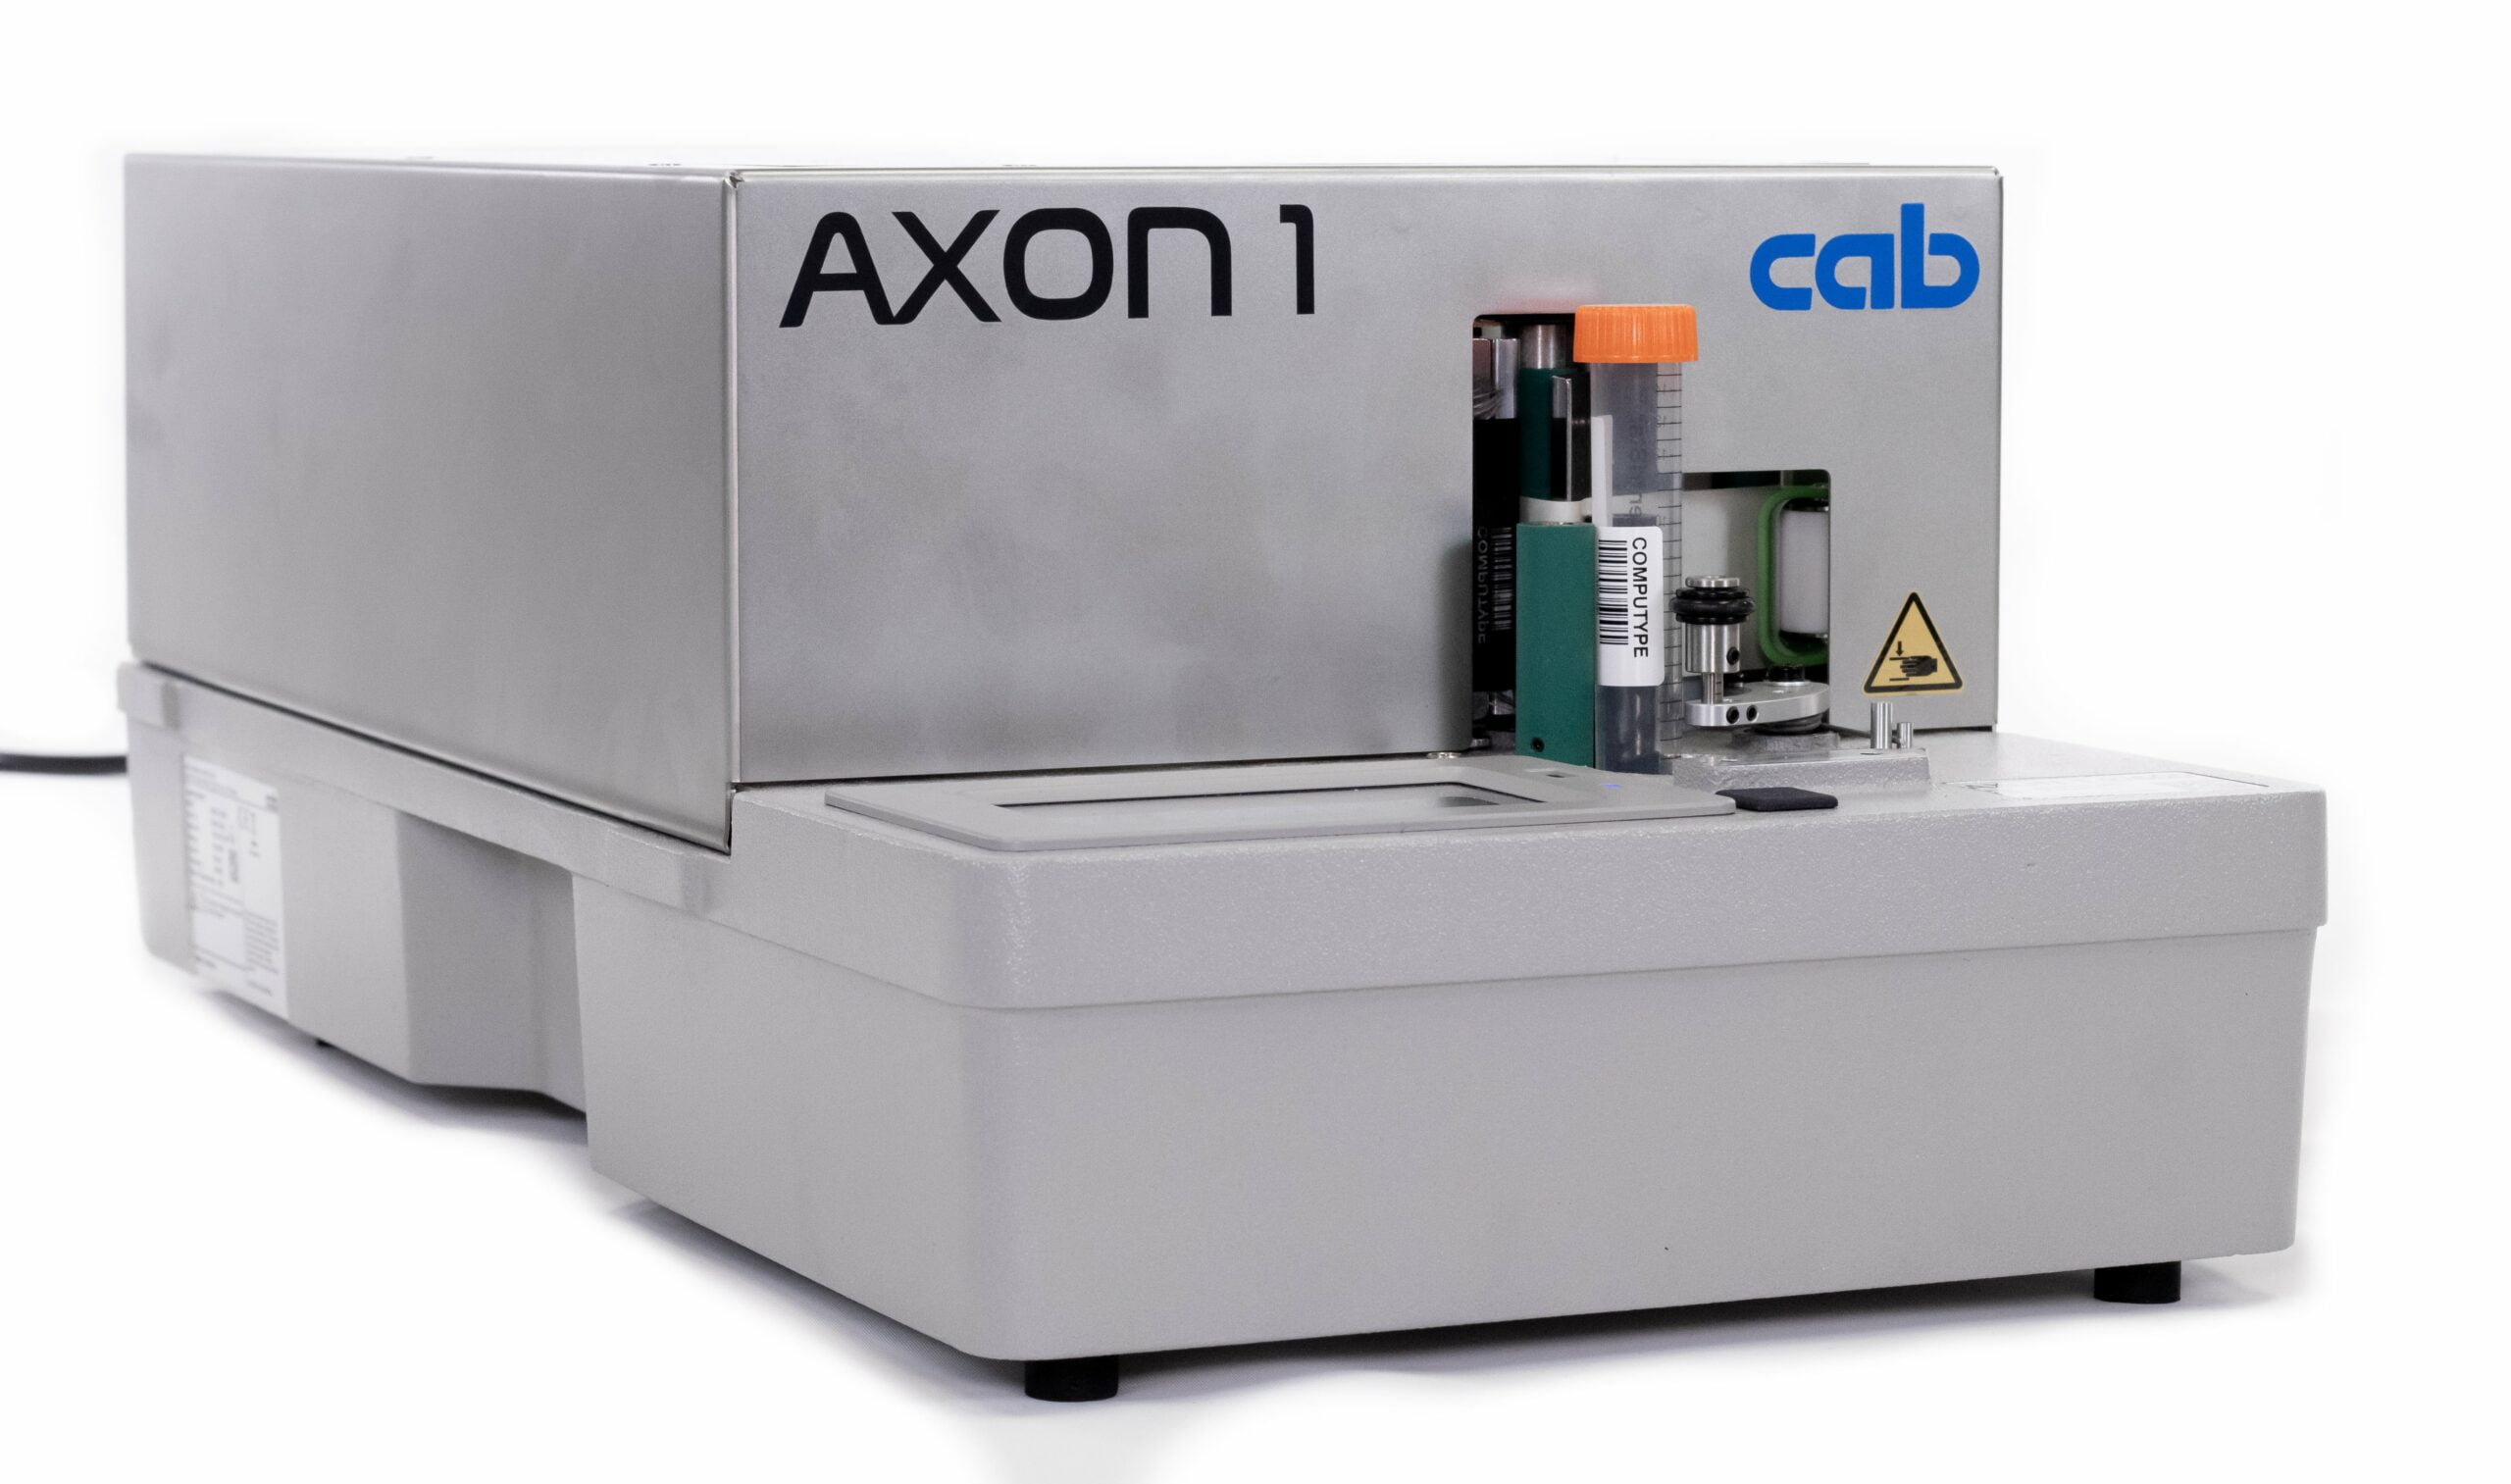 cab axon 1